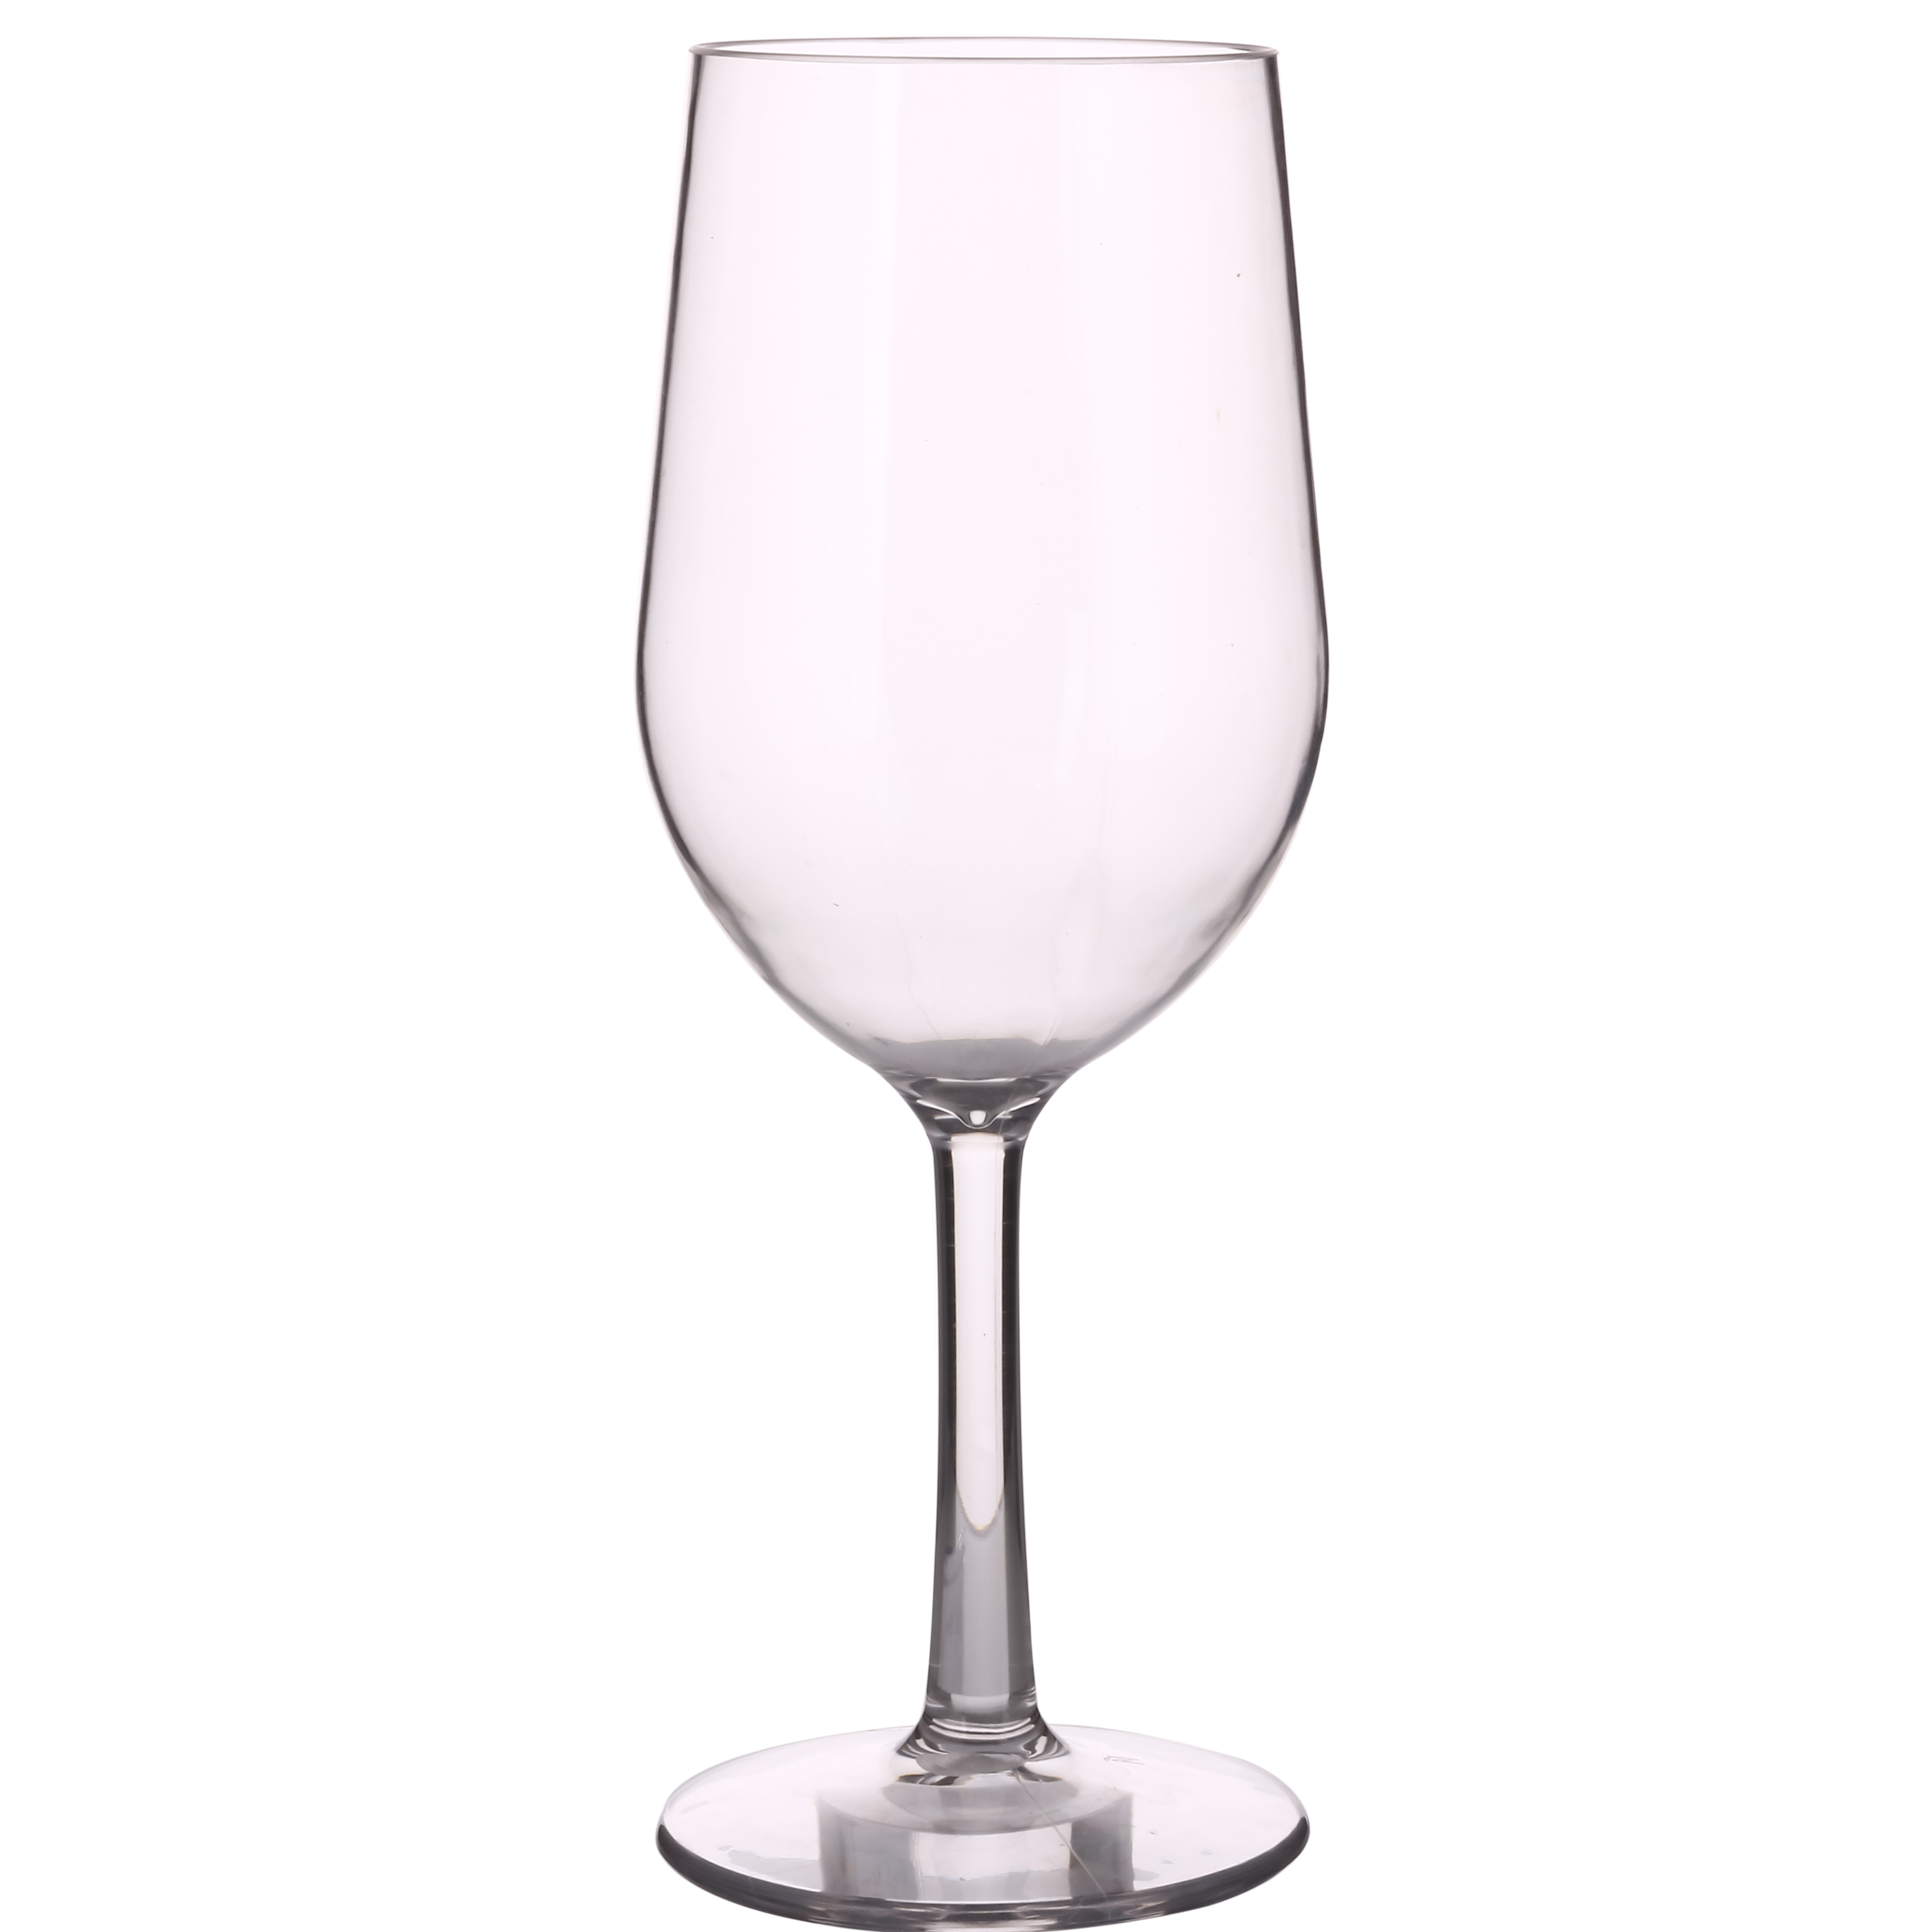 factory Outlets for Plastic Fish Bowl - Charmlite Unbreakable Wine Glasses  100% Tritan  Shatterproof Reusable And Dishwasher Safe Goblet Glass – 14oz – Charmlite